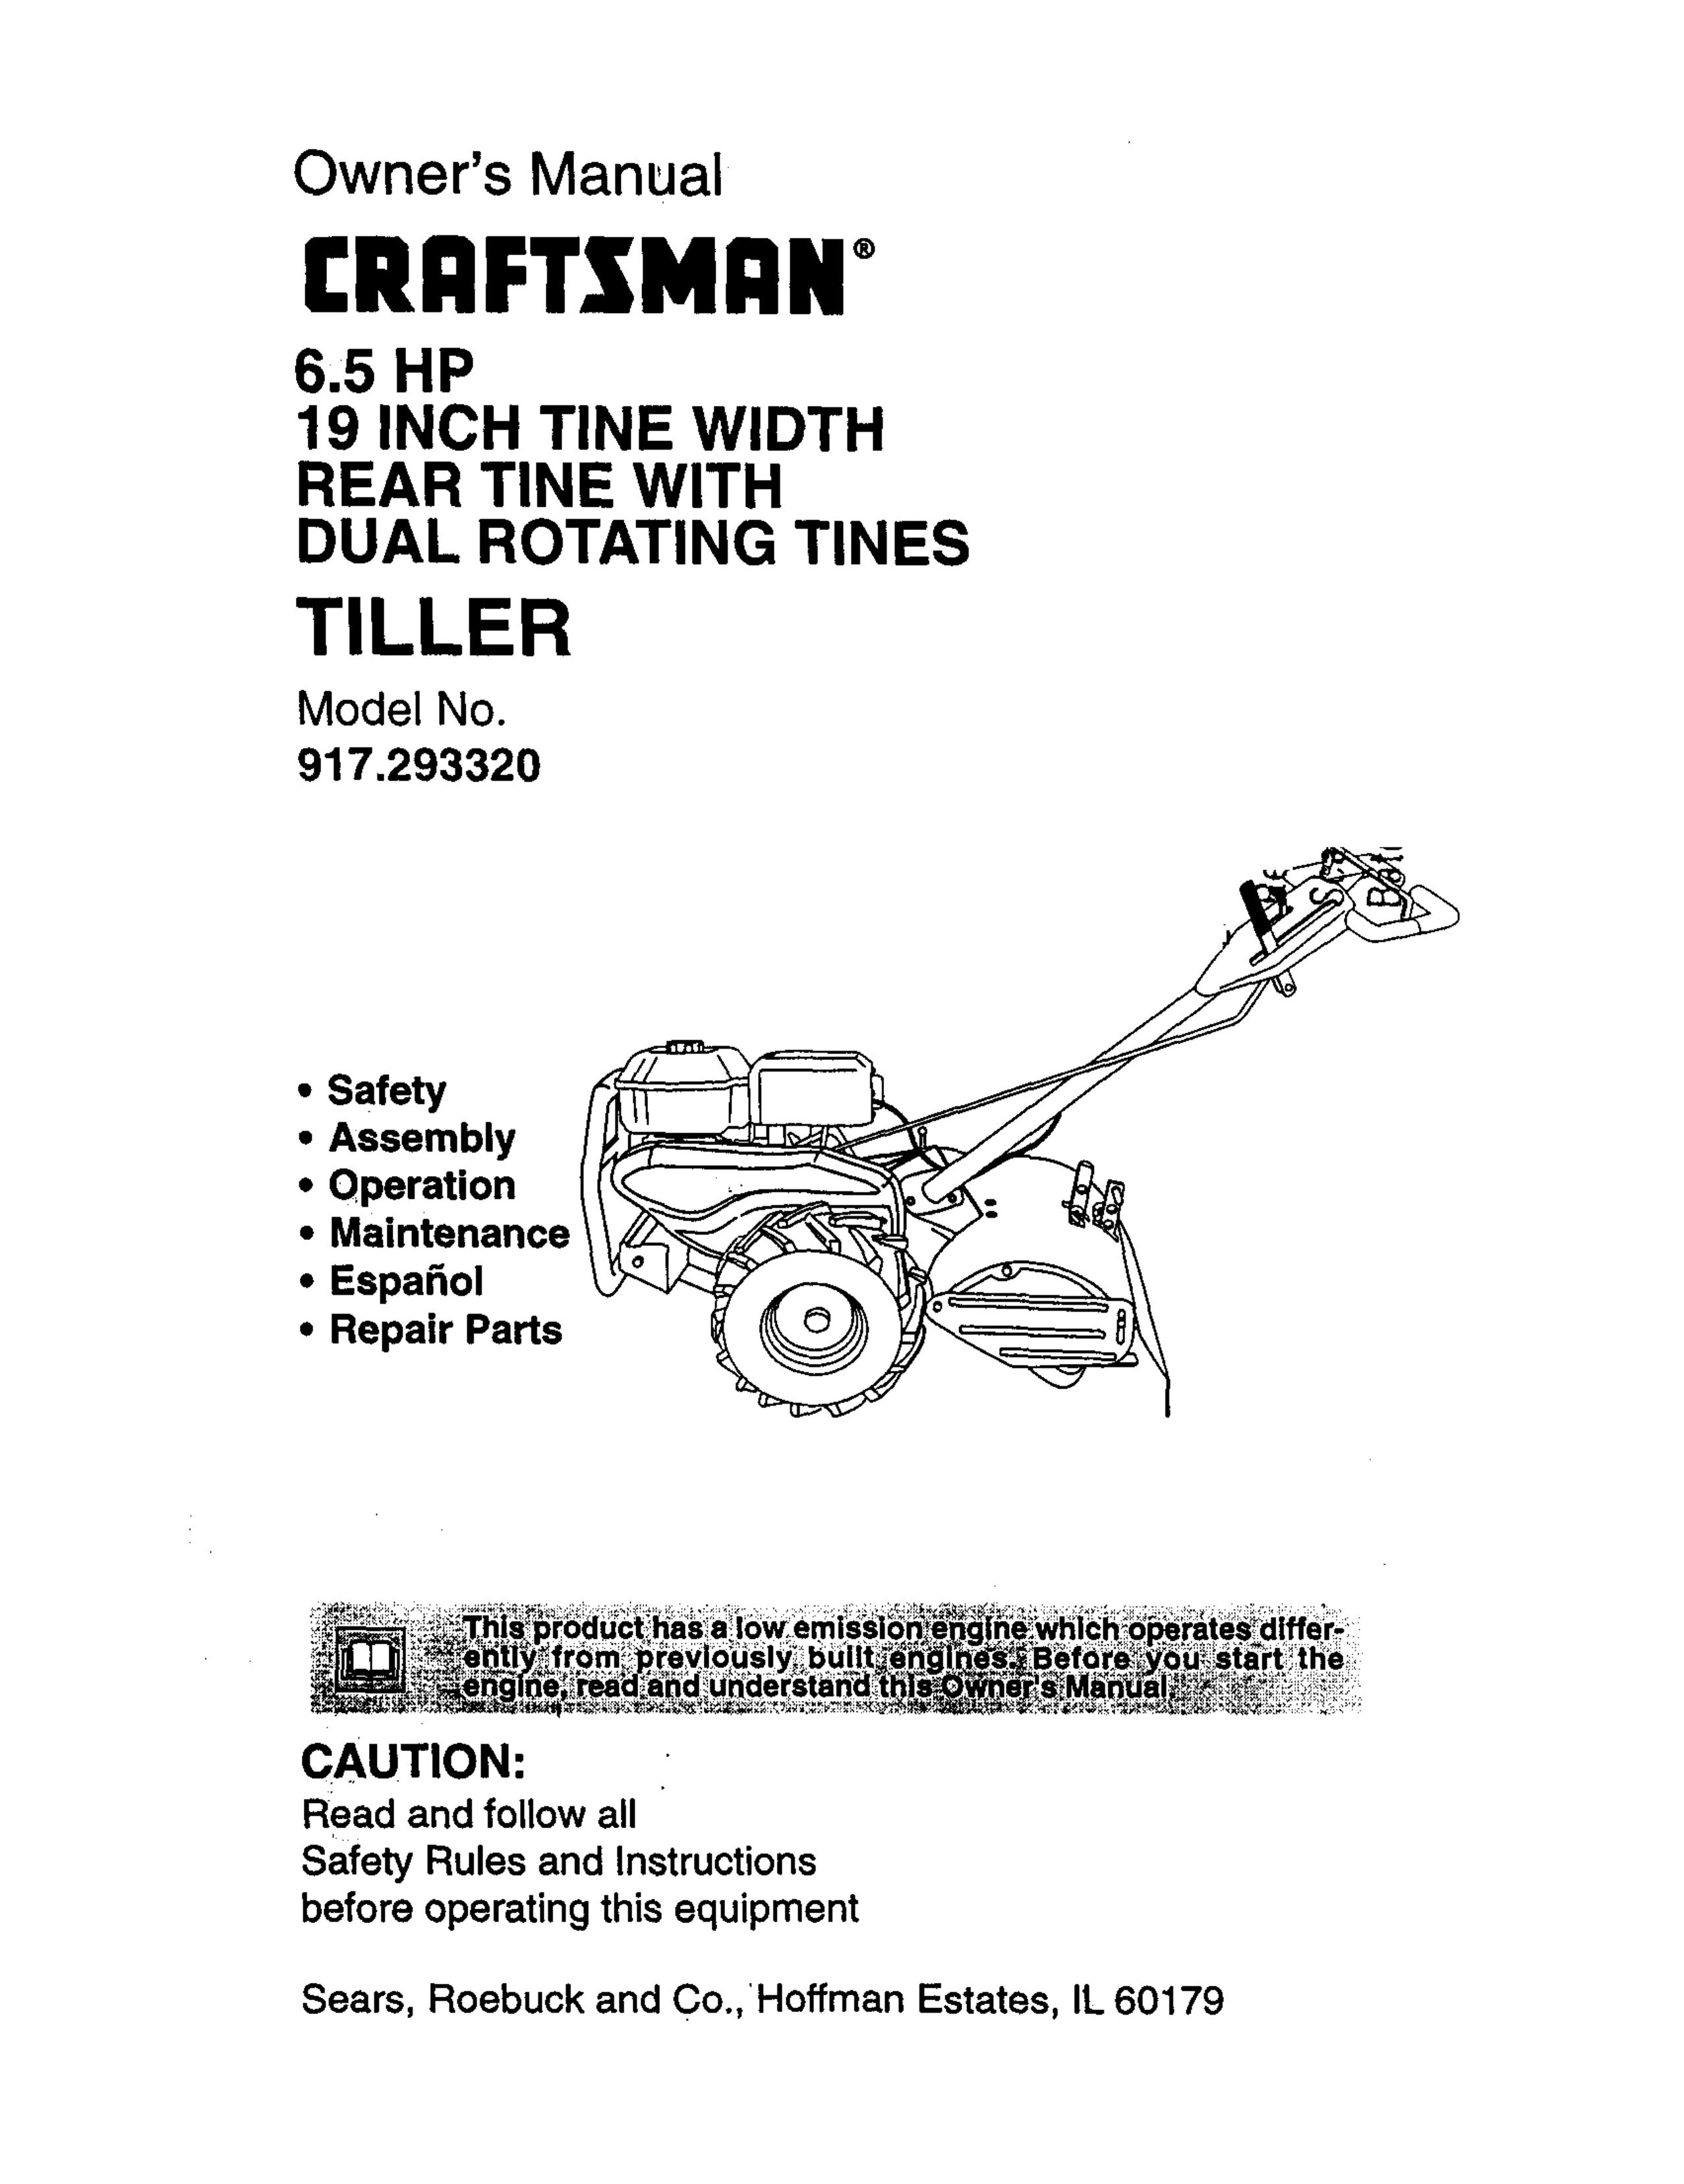 Craftsman 917.29332 Tiller User Manual